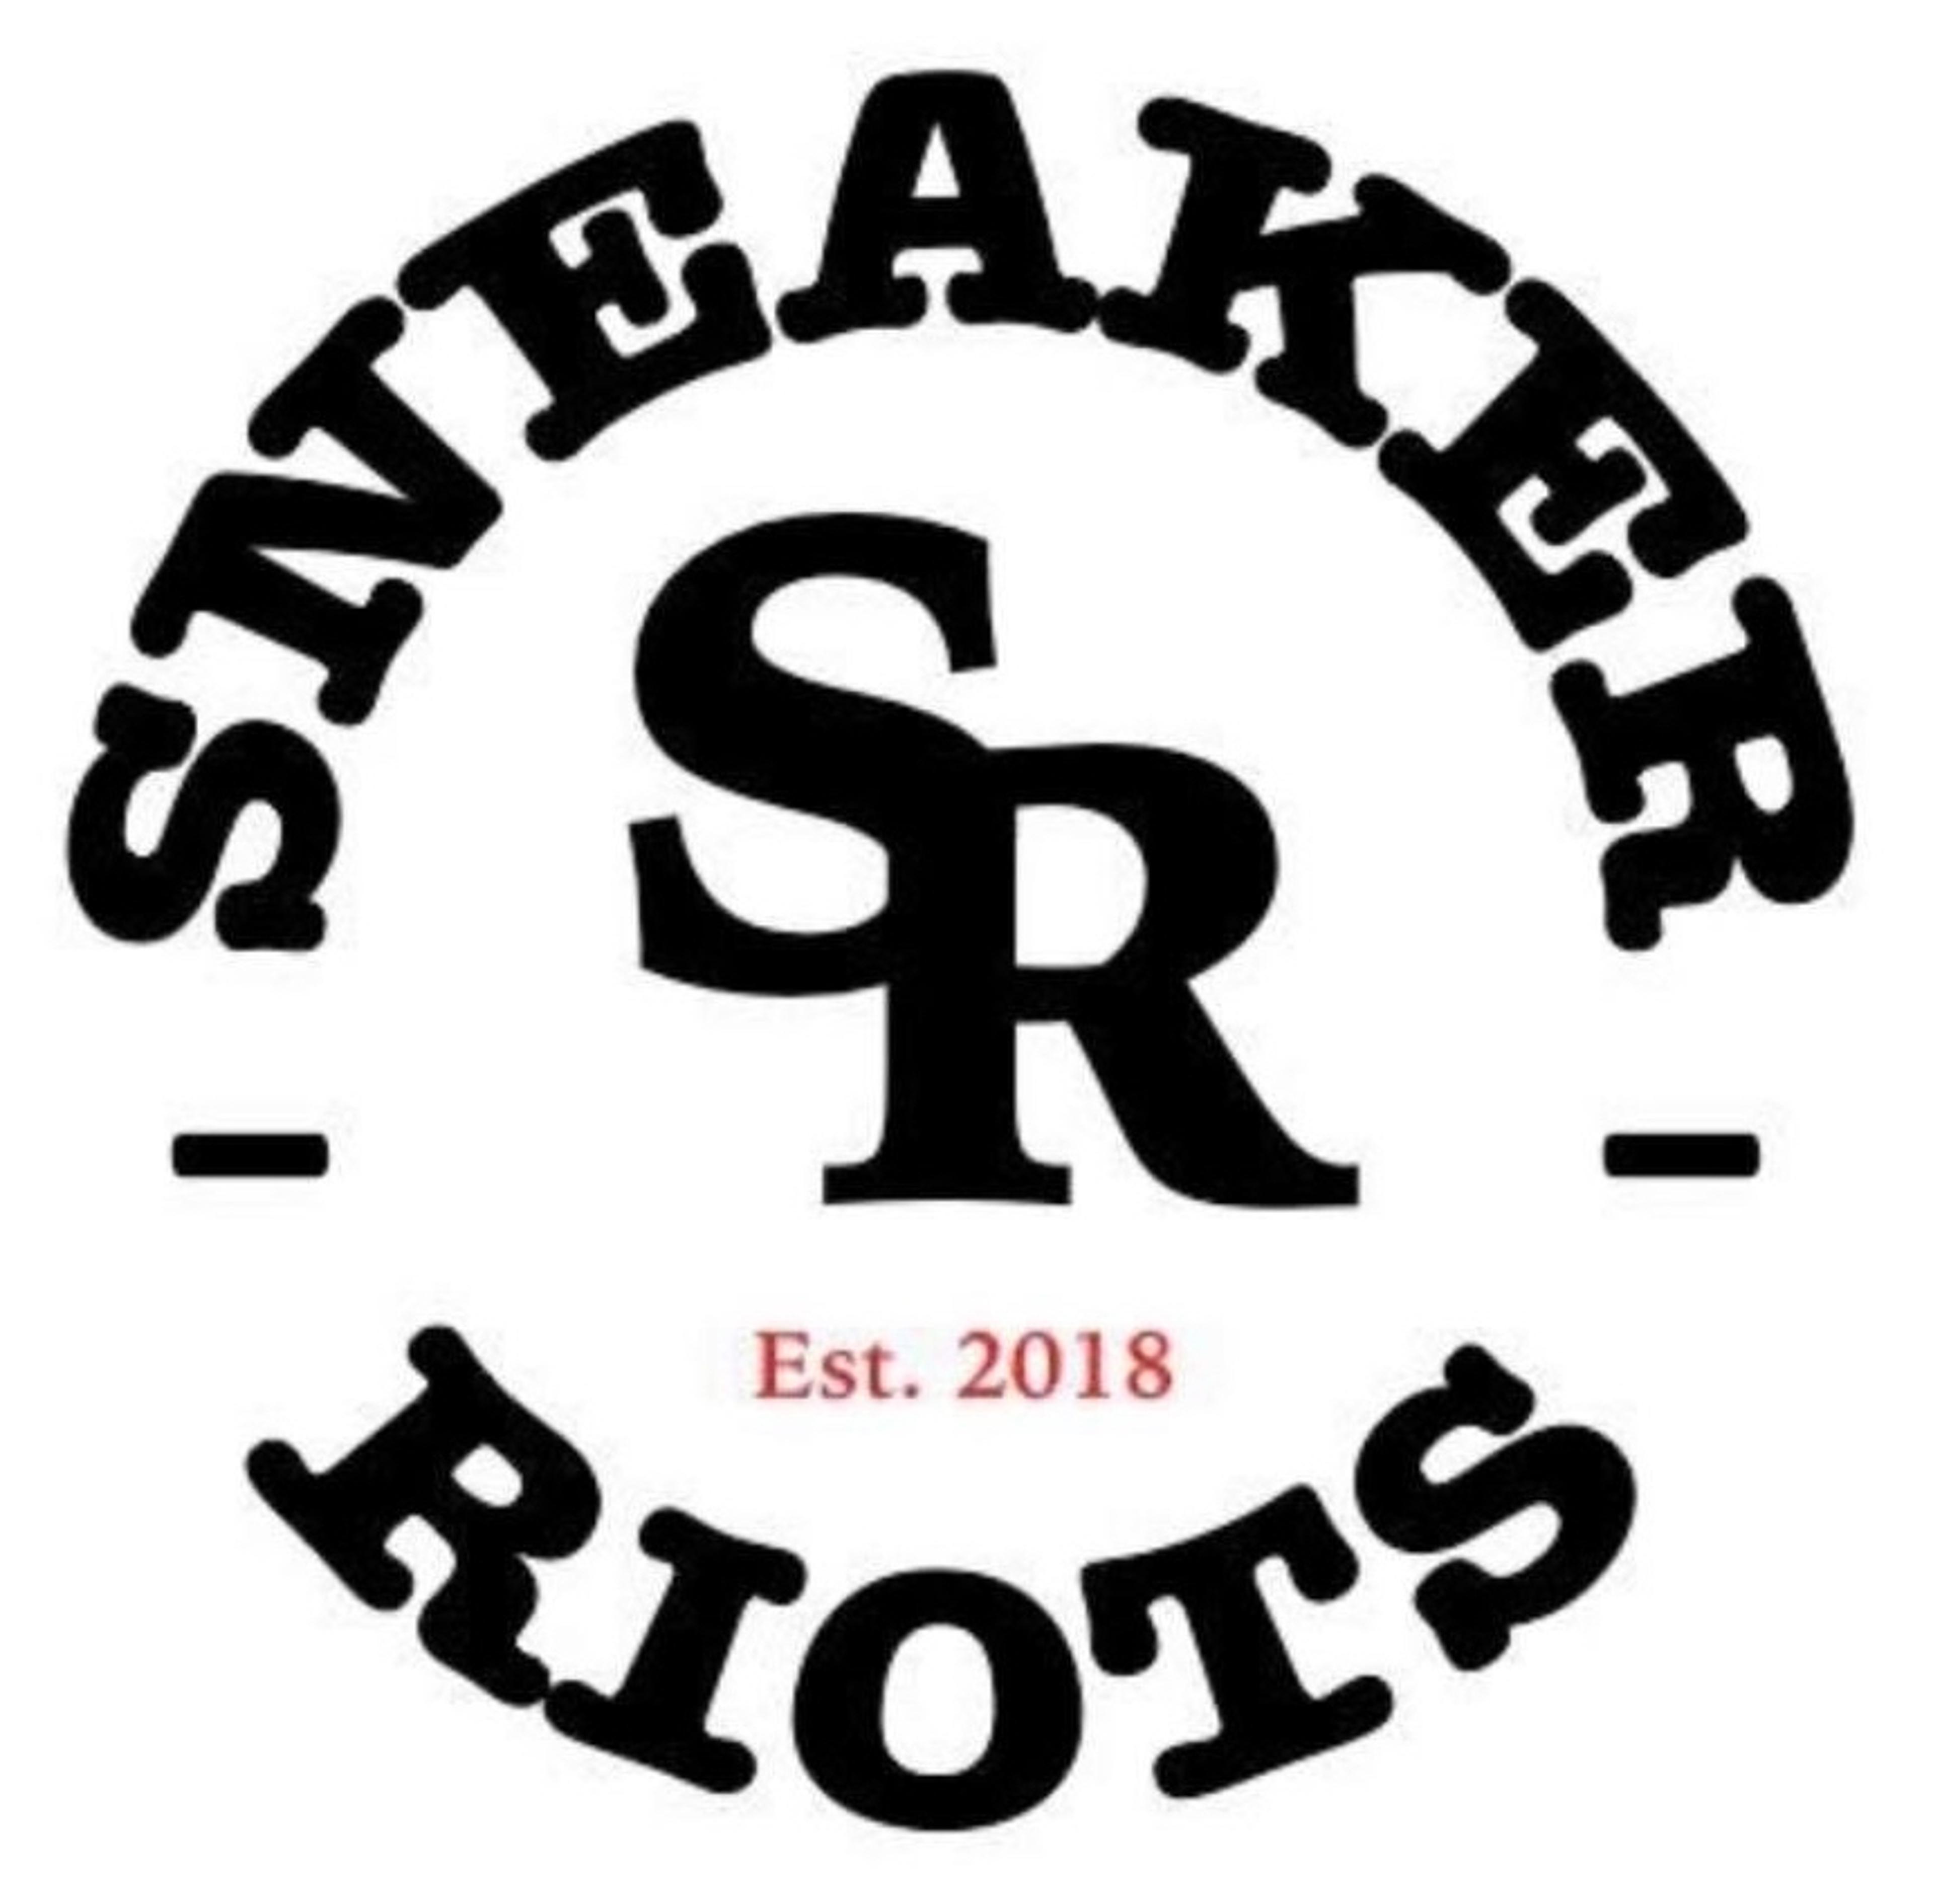 Sneaker Riots